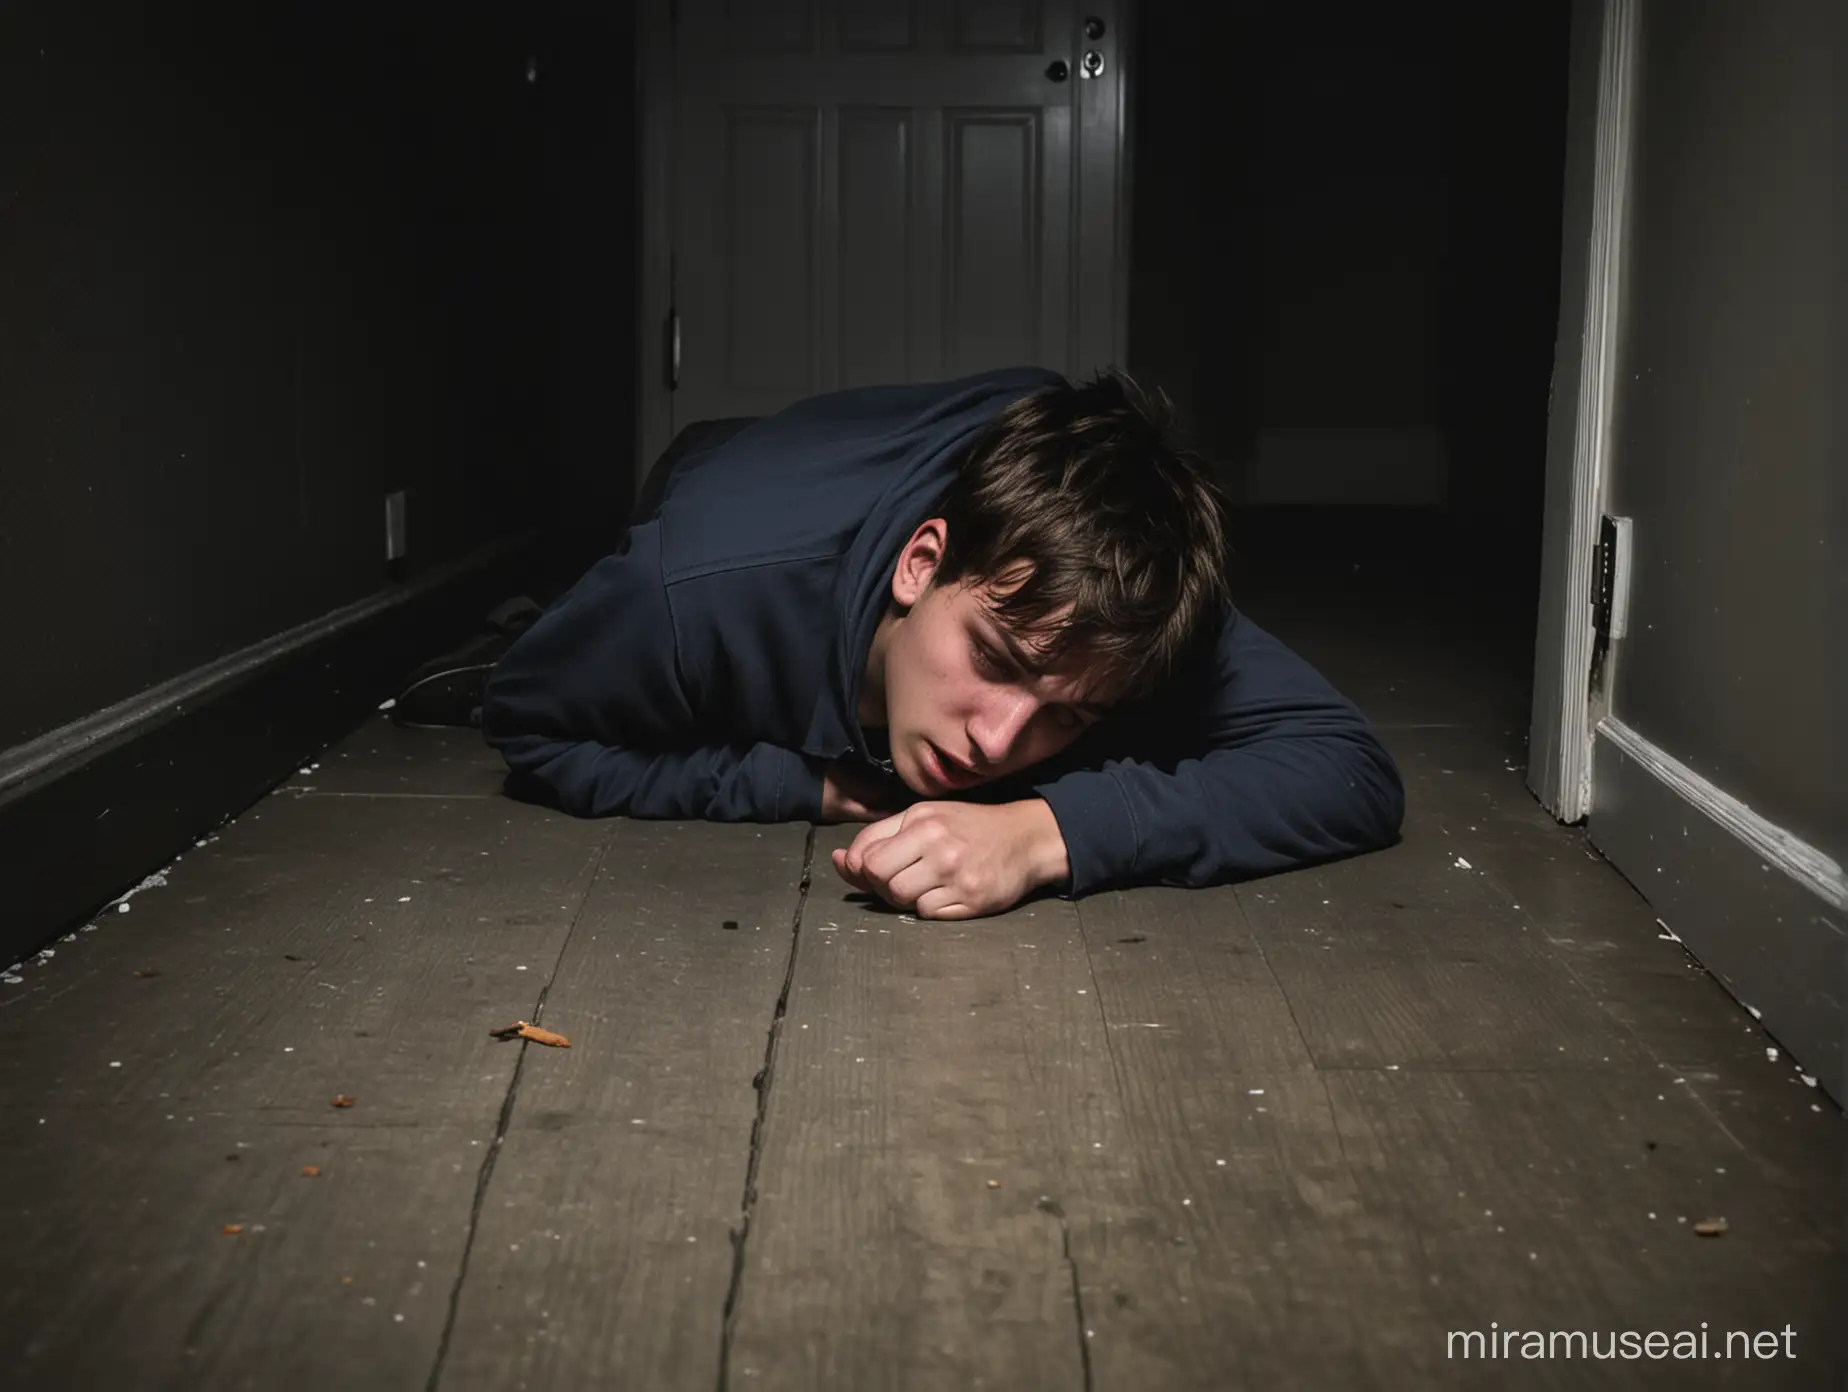 Teenage Boy Unconscious in Dark Room at Night